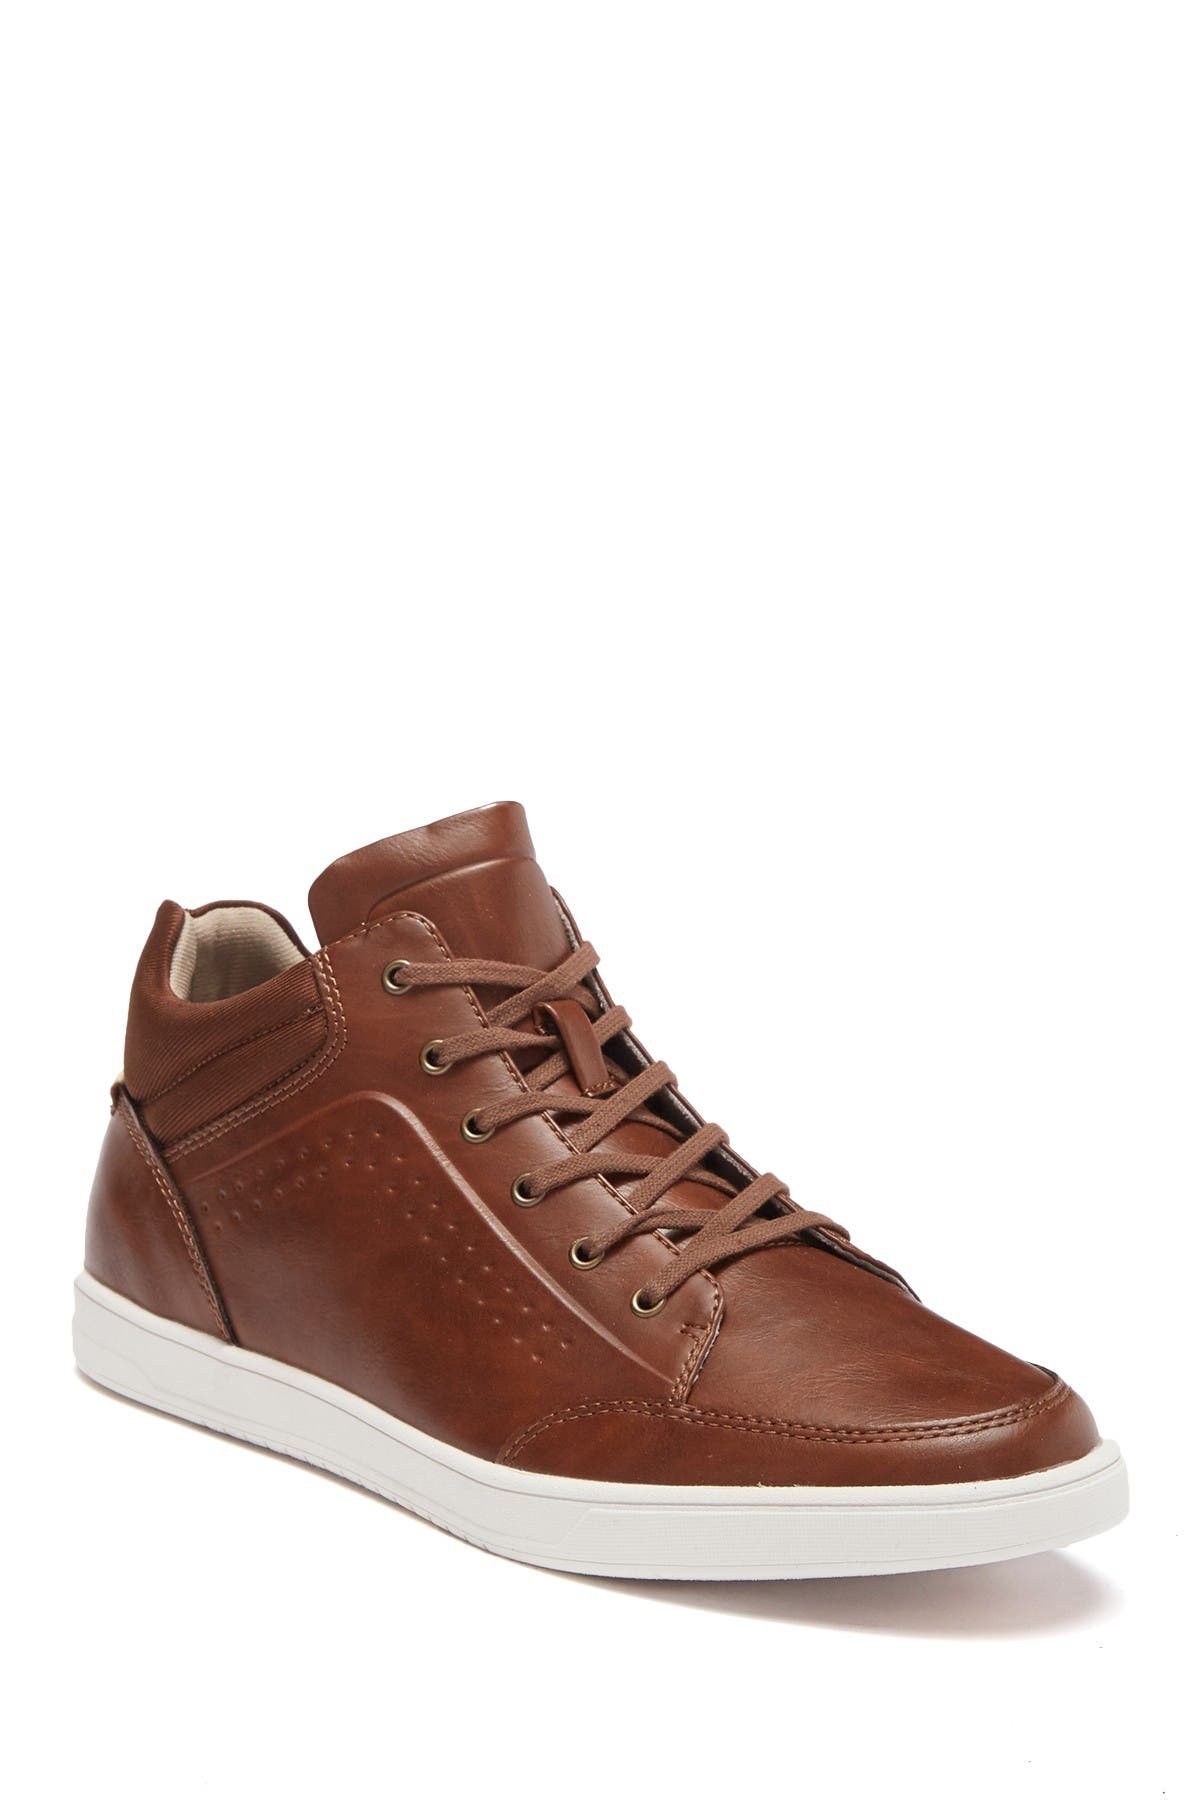 Aldo | Eowelisien Leather Sneaker 